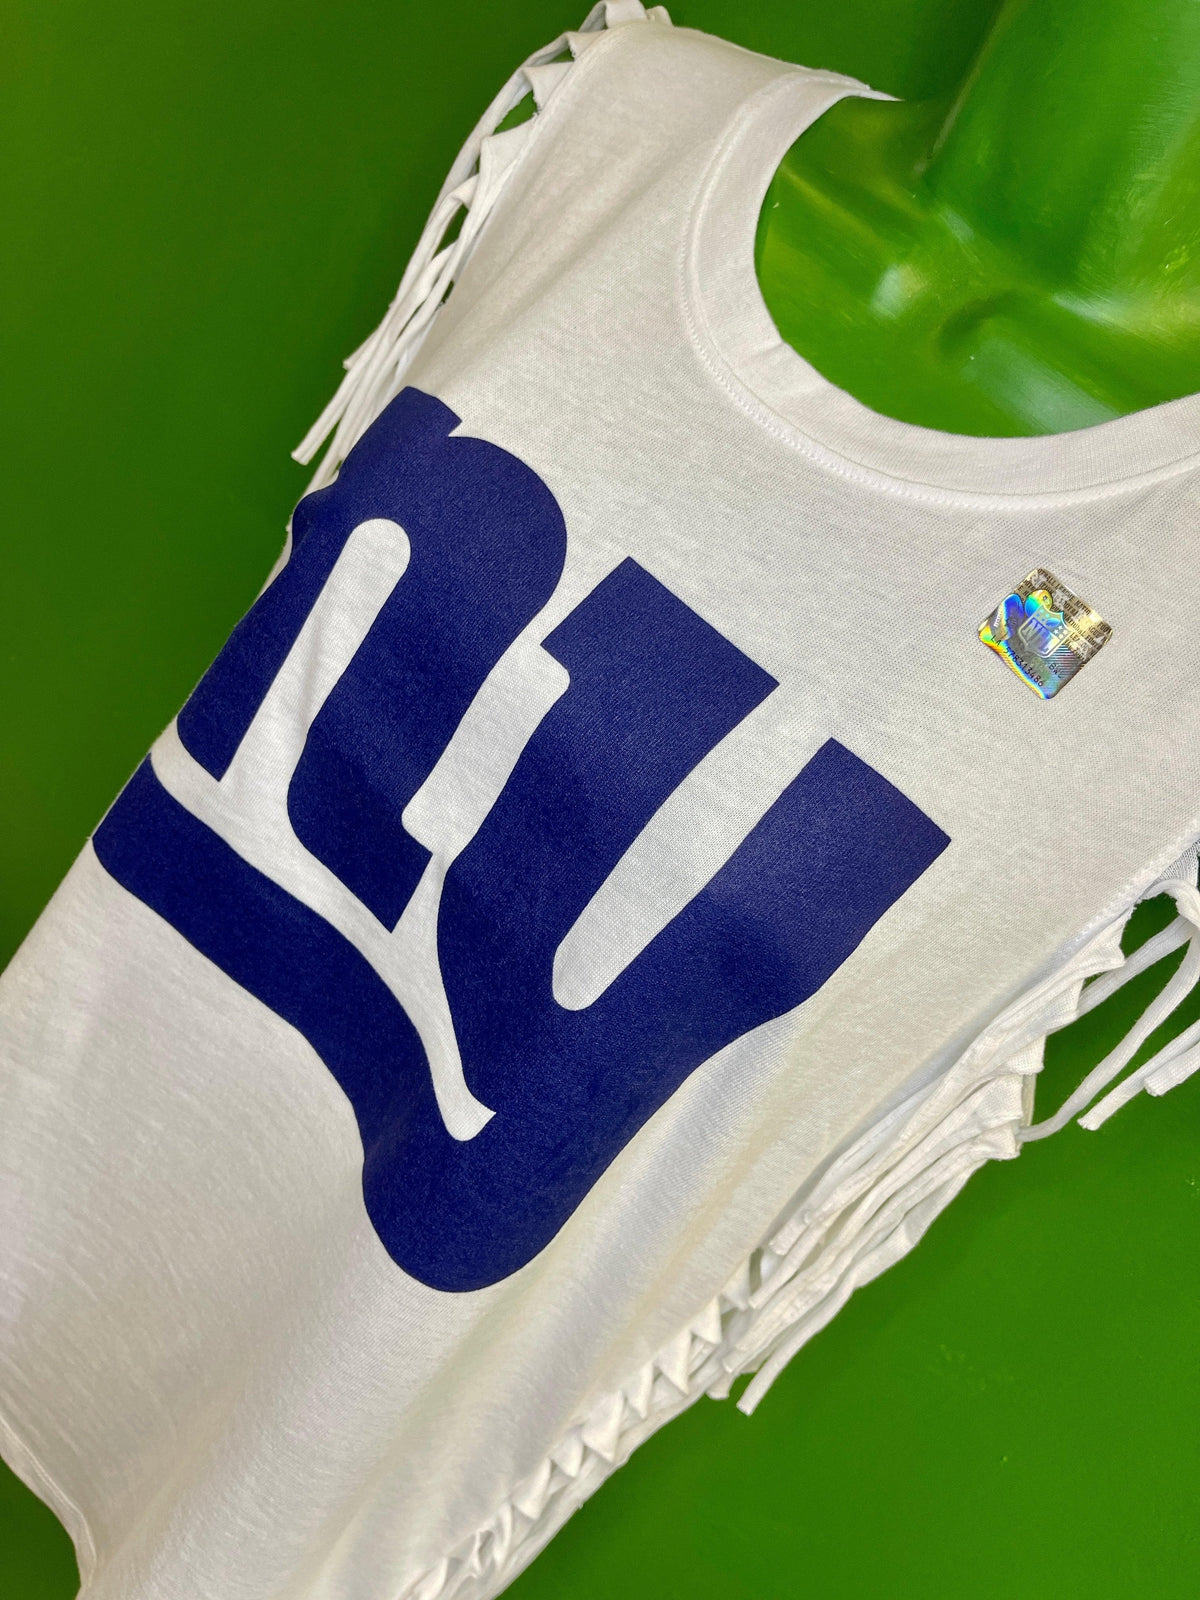 NFL New York Giants Junk Food Fringe Sleeveless T-Shirt Women's Large NWT